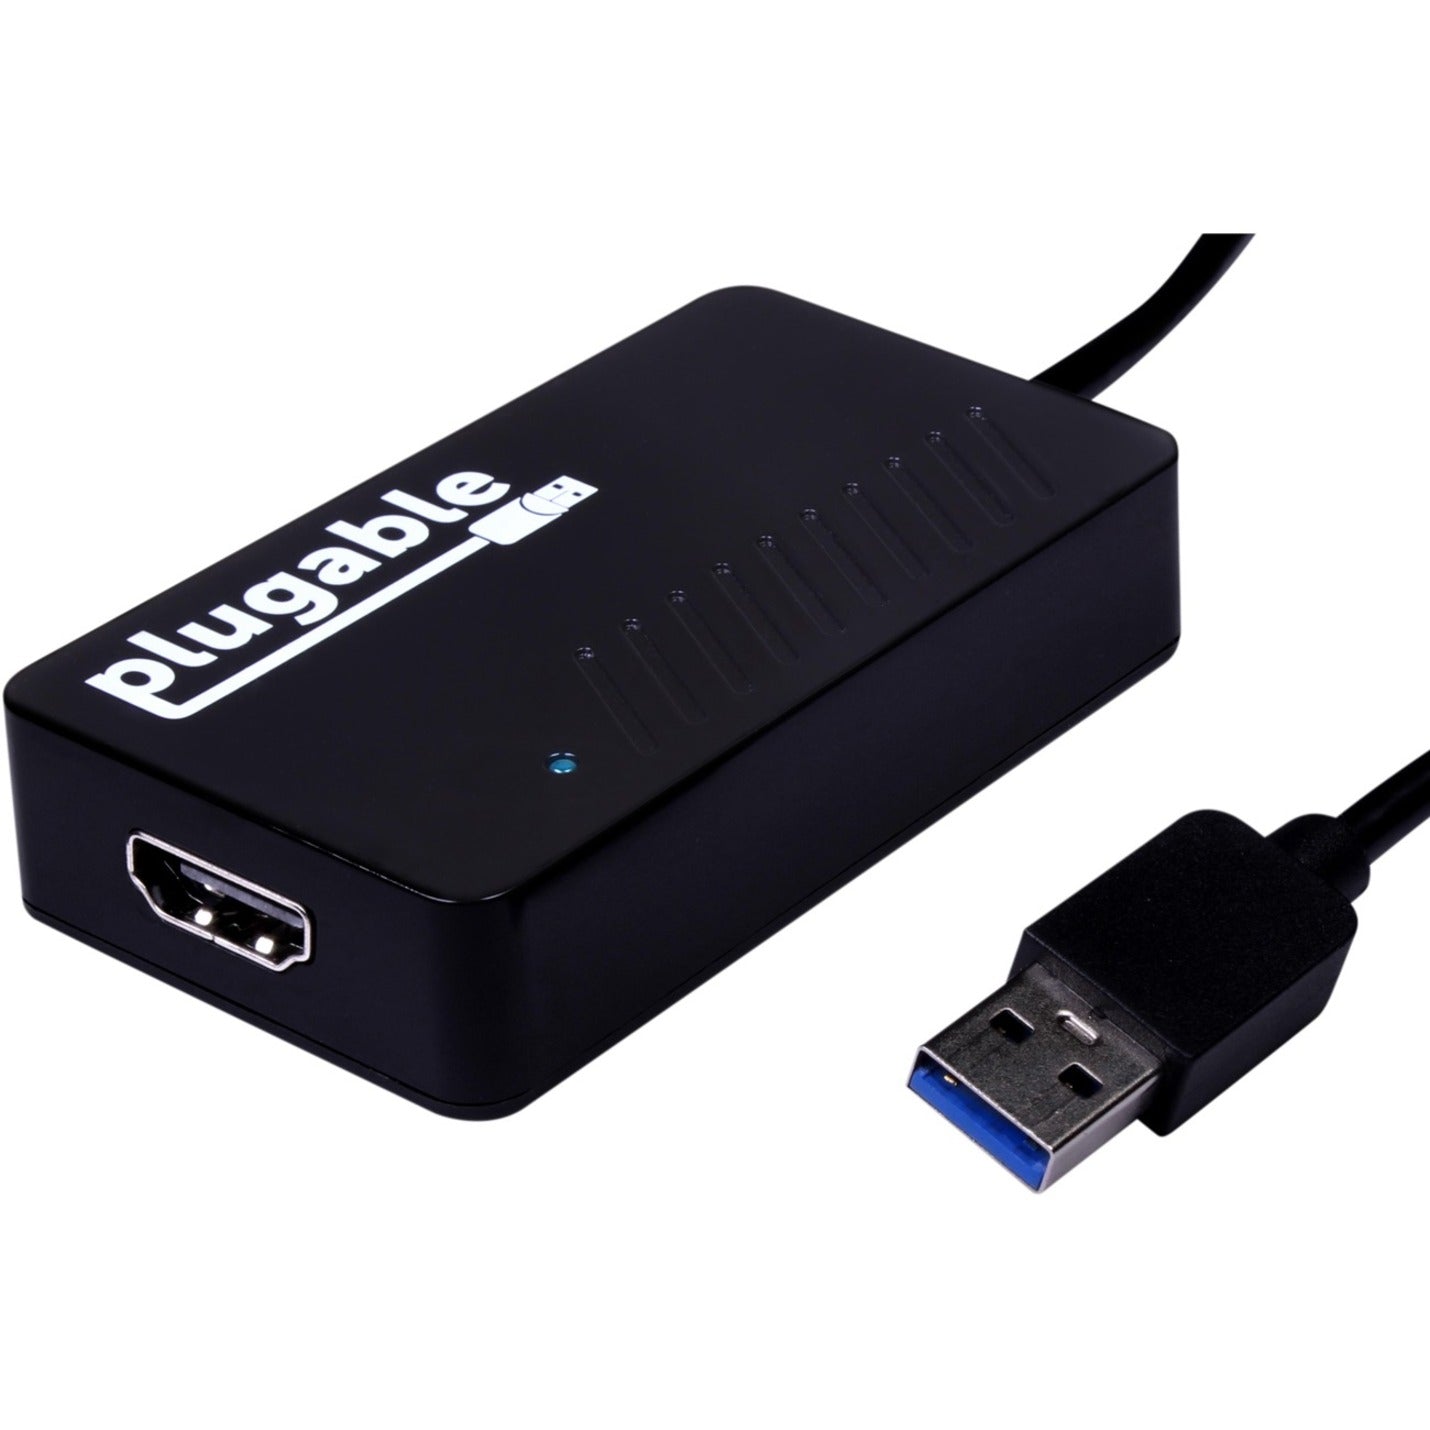 Plugable UGA-2KHDMI USB 3.0 to HDMI Video Graphics Adapter with Audio for Multiple Monitors 2560 x 1440 Resolution - プラガブル UGA-2KHDMI USB 3.0 から HDMI ビデオ グラフィックス アダプター オーディオ対応 モニターのための、2560 x 1440 解像度